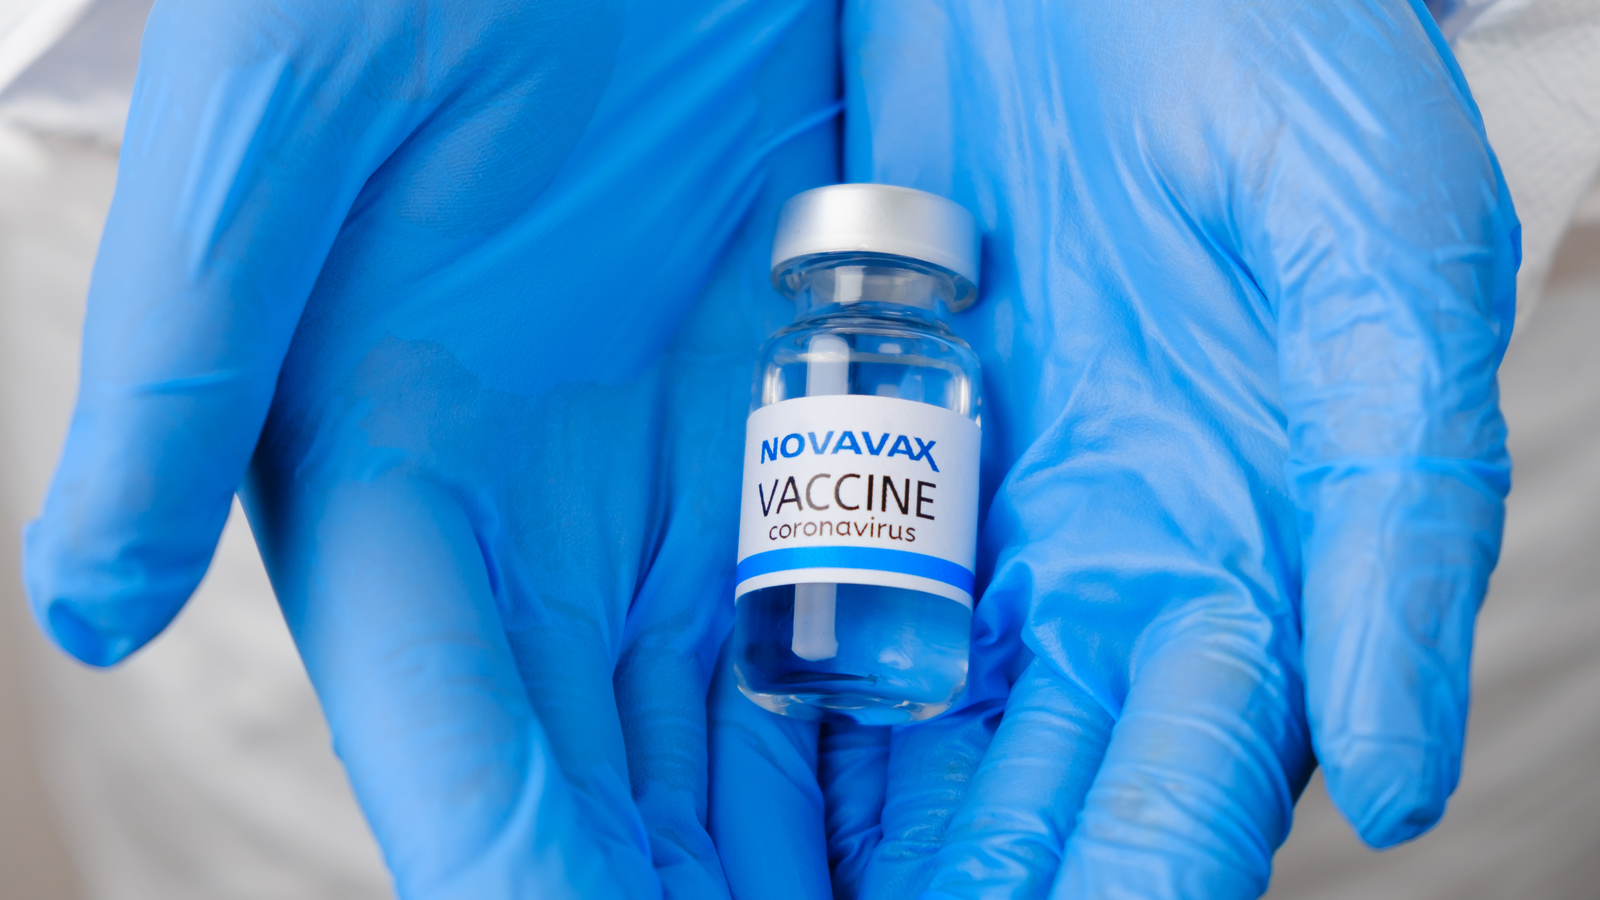 Novavax (NVAX) vaccine for prevention of coronavirus, Covid-19, Sars-Cov-2 in doctors hands in rubber blue gloves